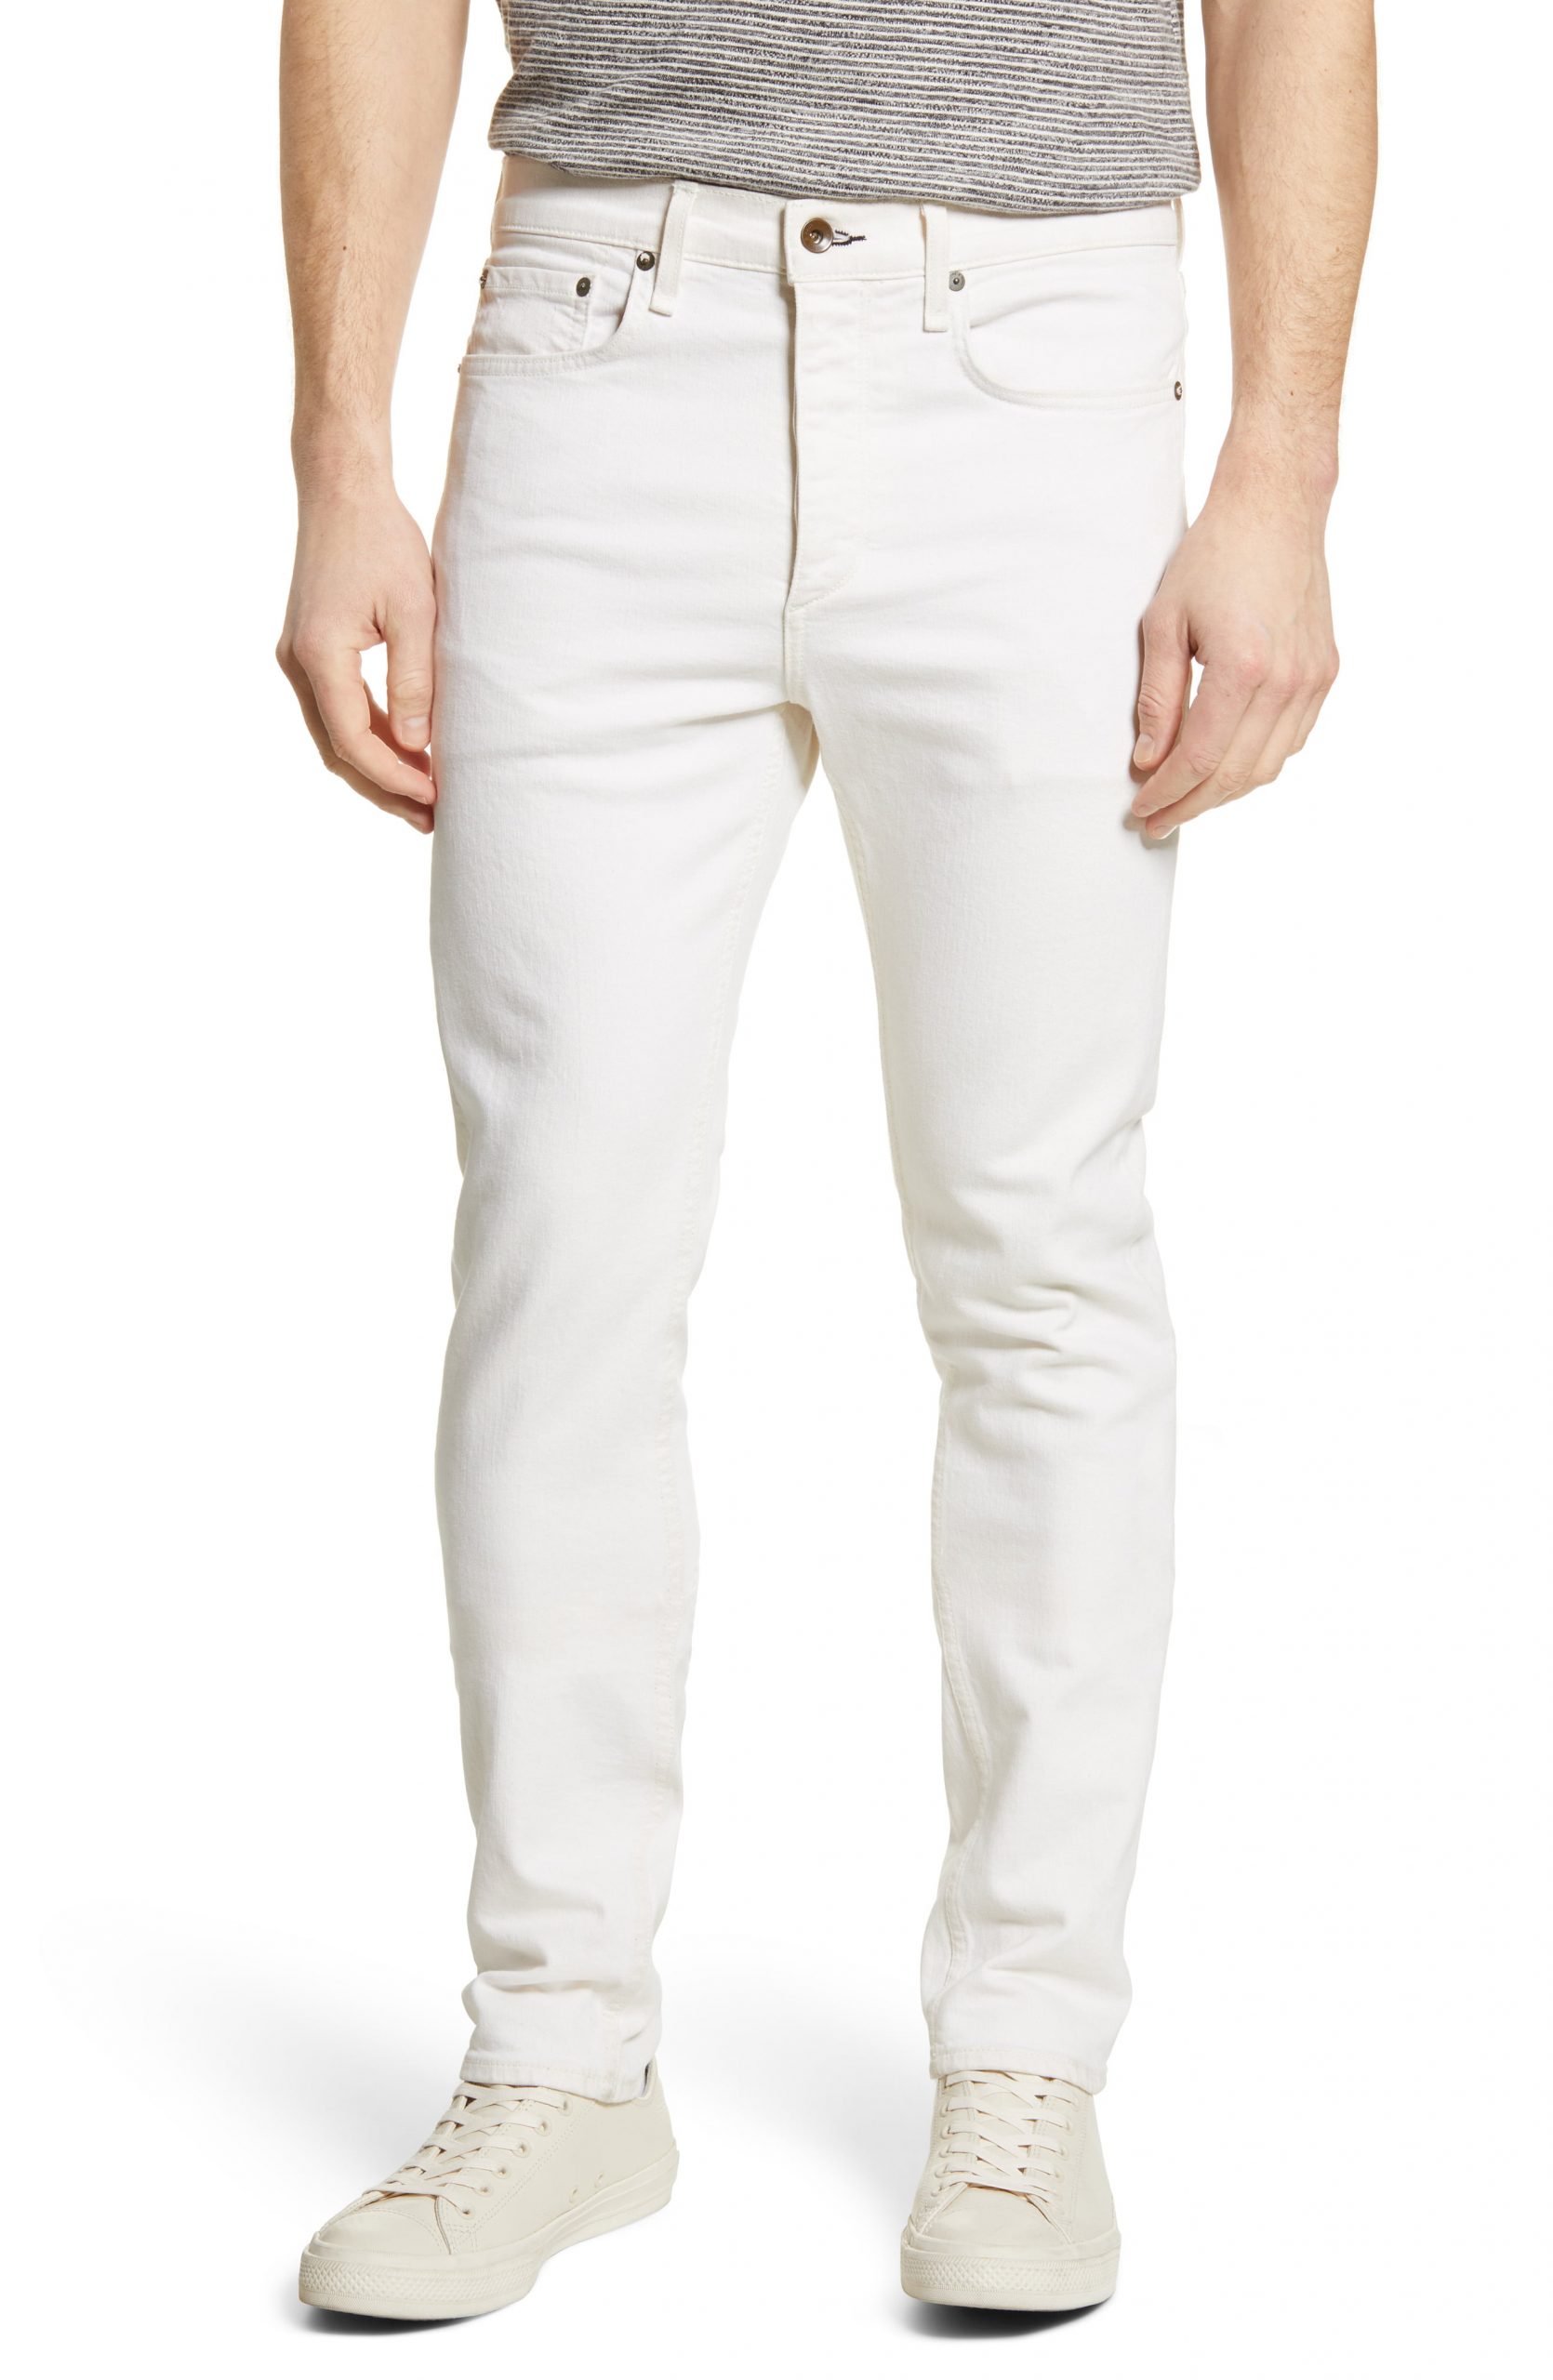 White Slim Fit Jeans Mens Next / 2019 Wholesale MORUANCLE Mens White ...